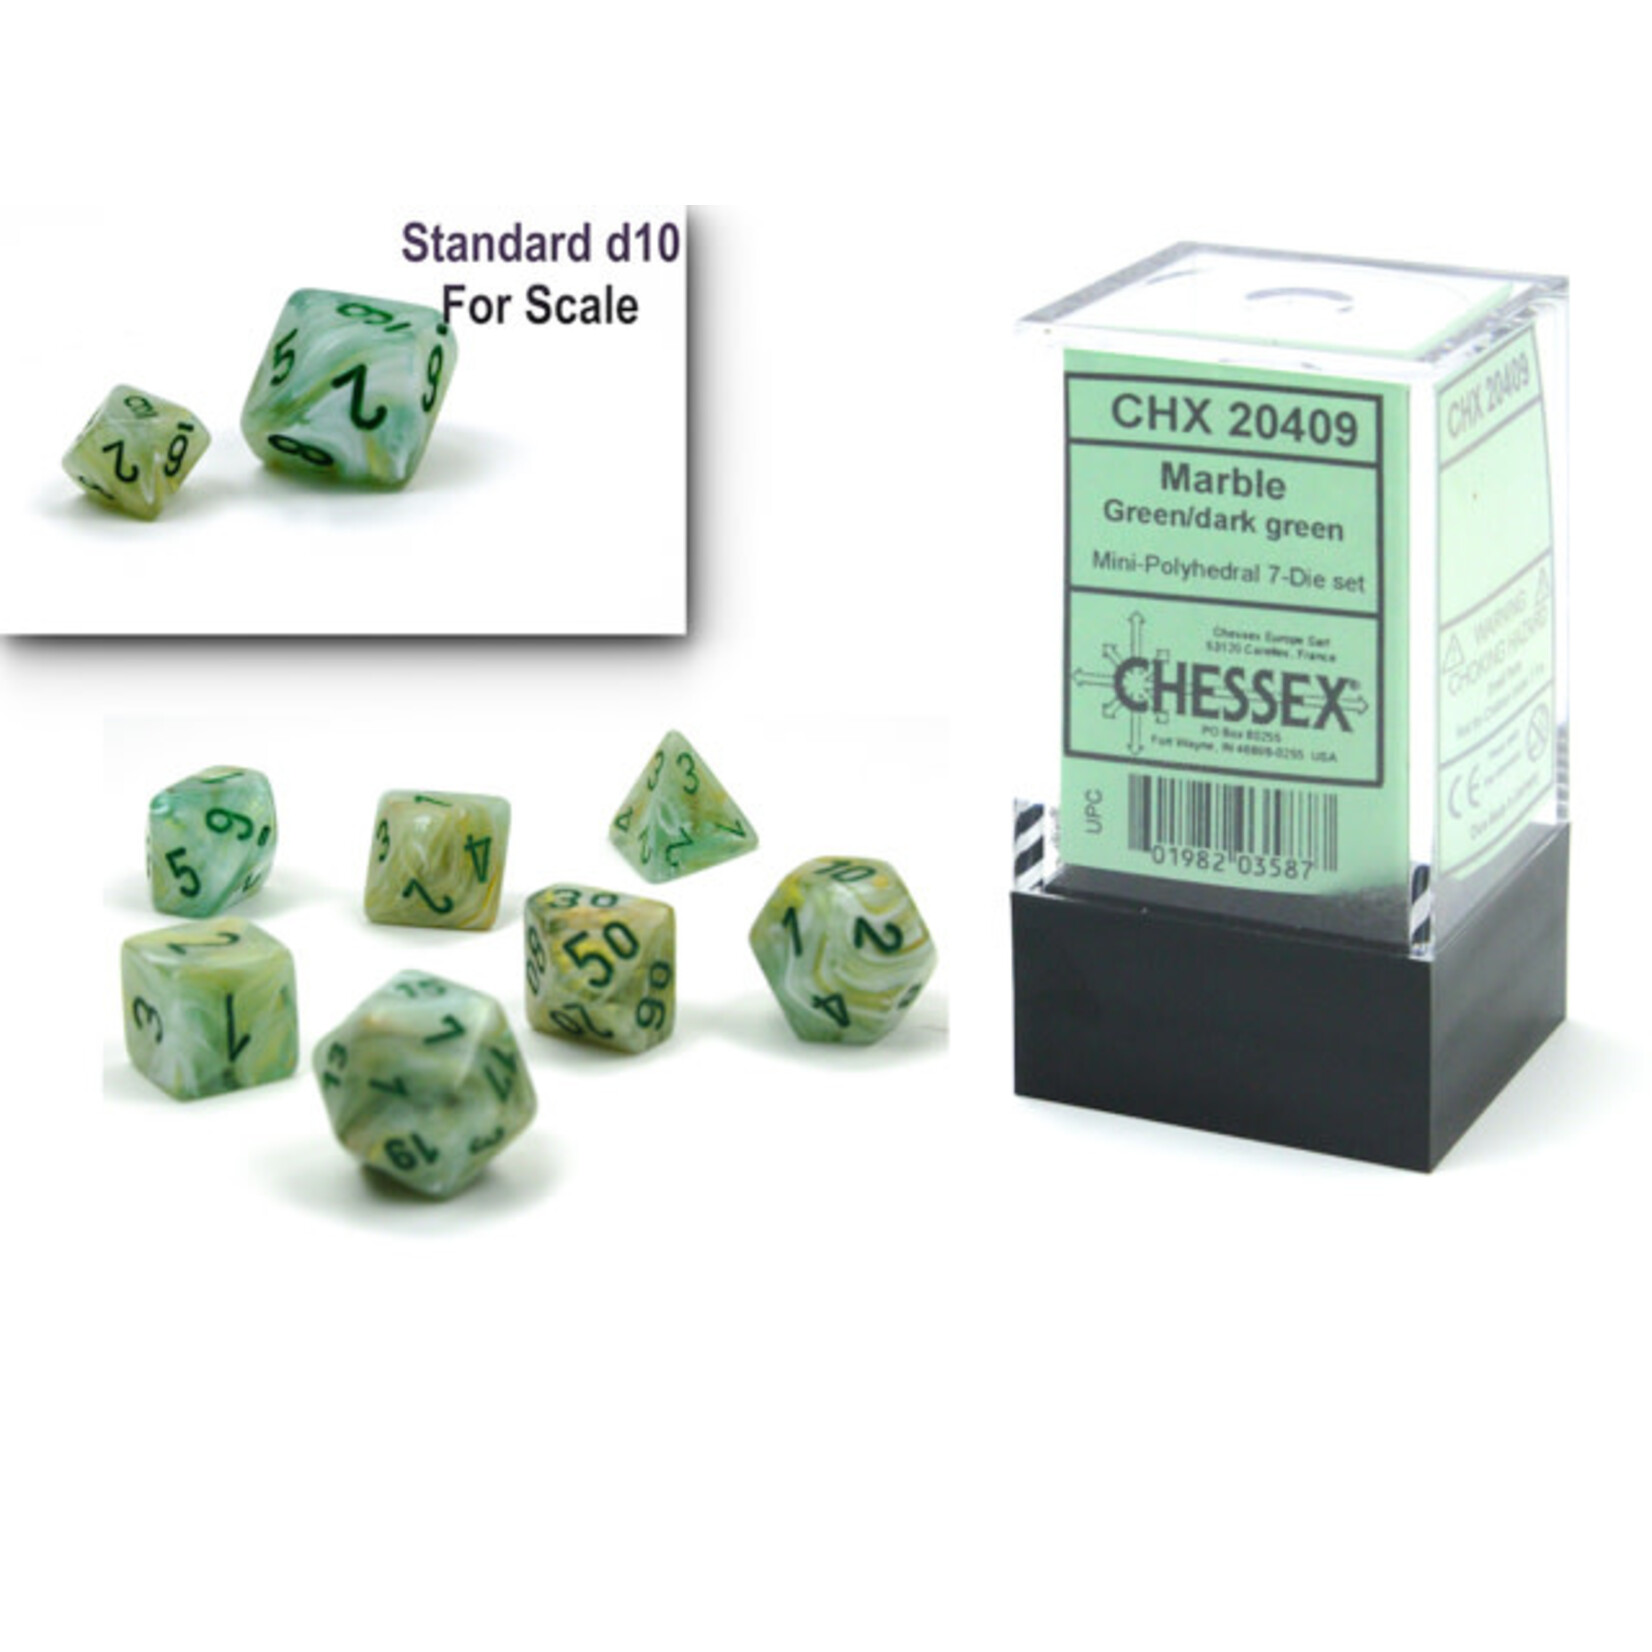 Chessex Marble Green/dark green Mini-Polyhedral 7-Die Set